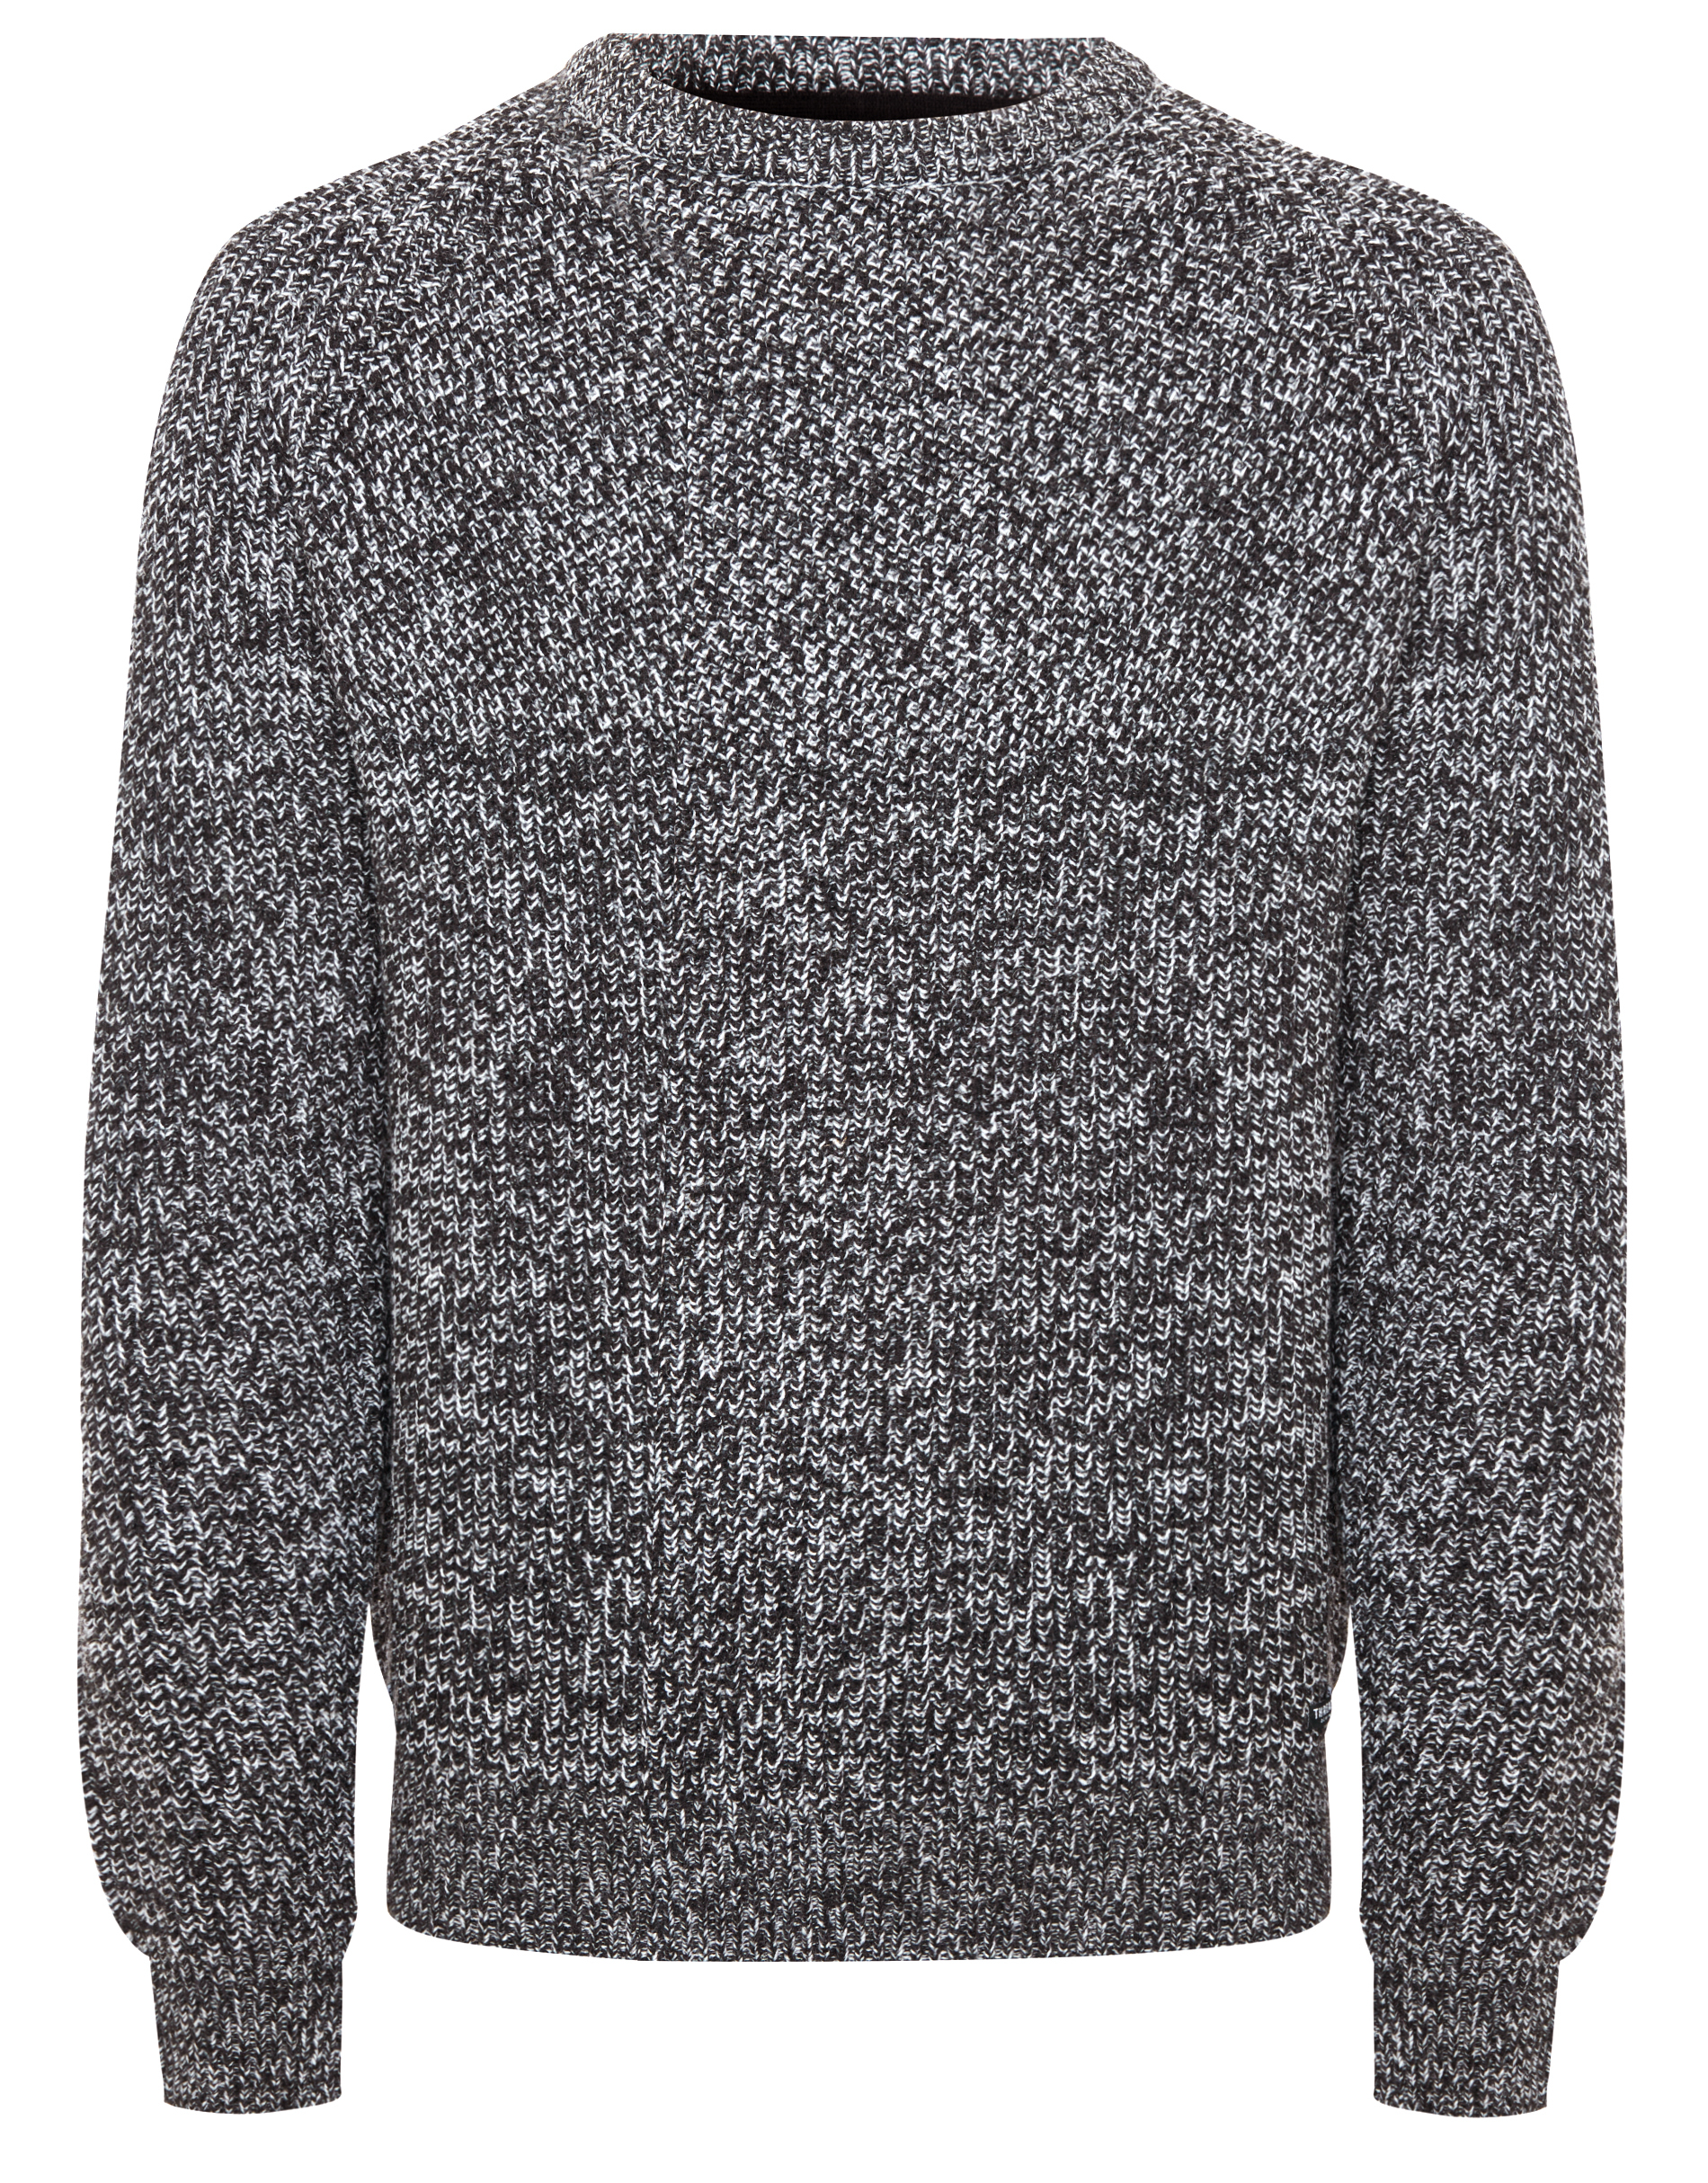 Пуловер Threadbare Strick Reed, черный пуловер threadbare strick reed черный